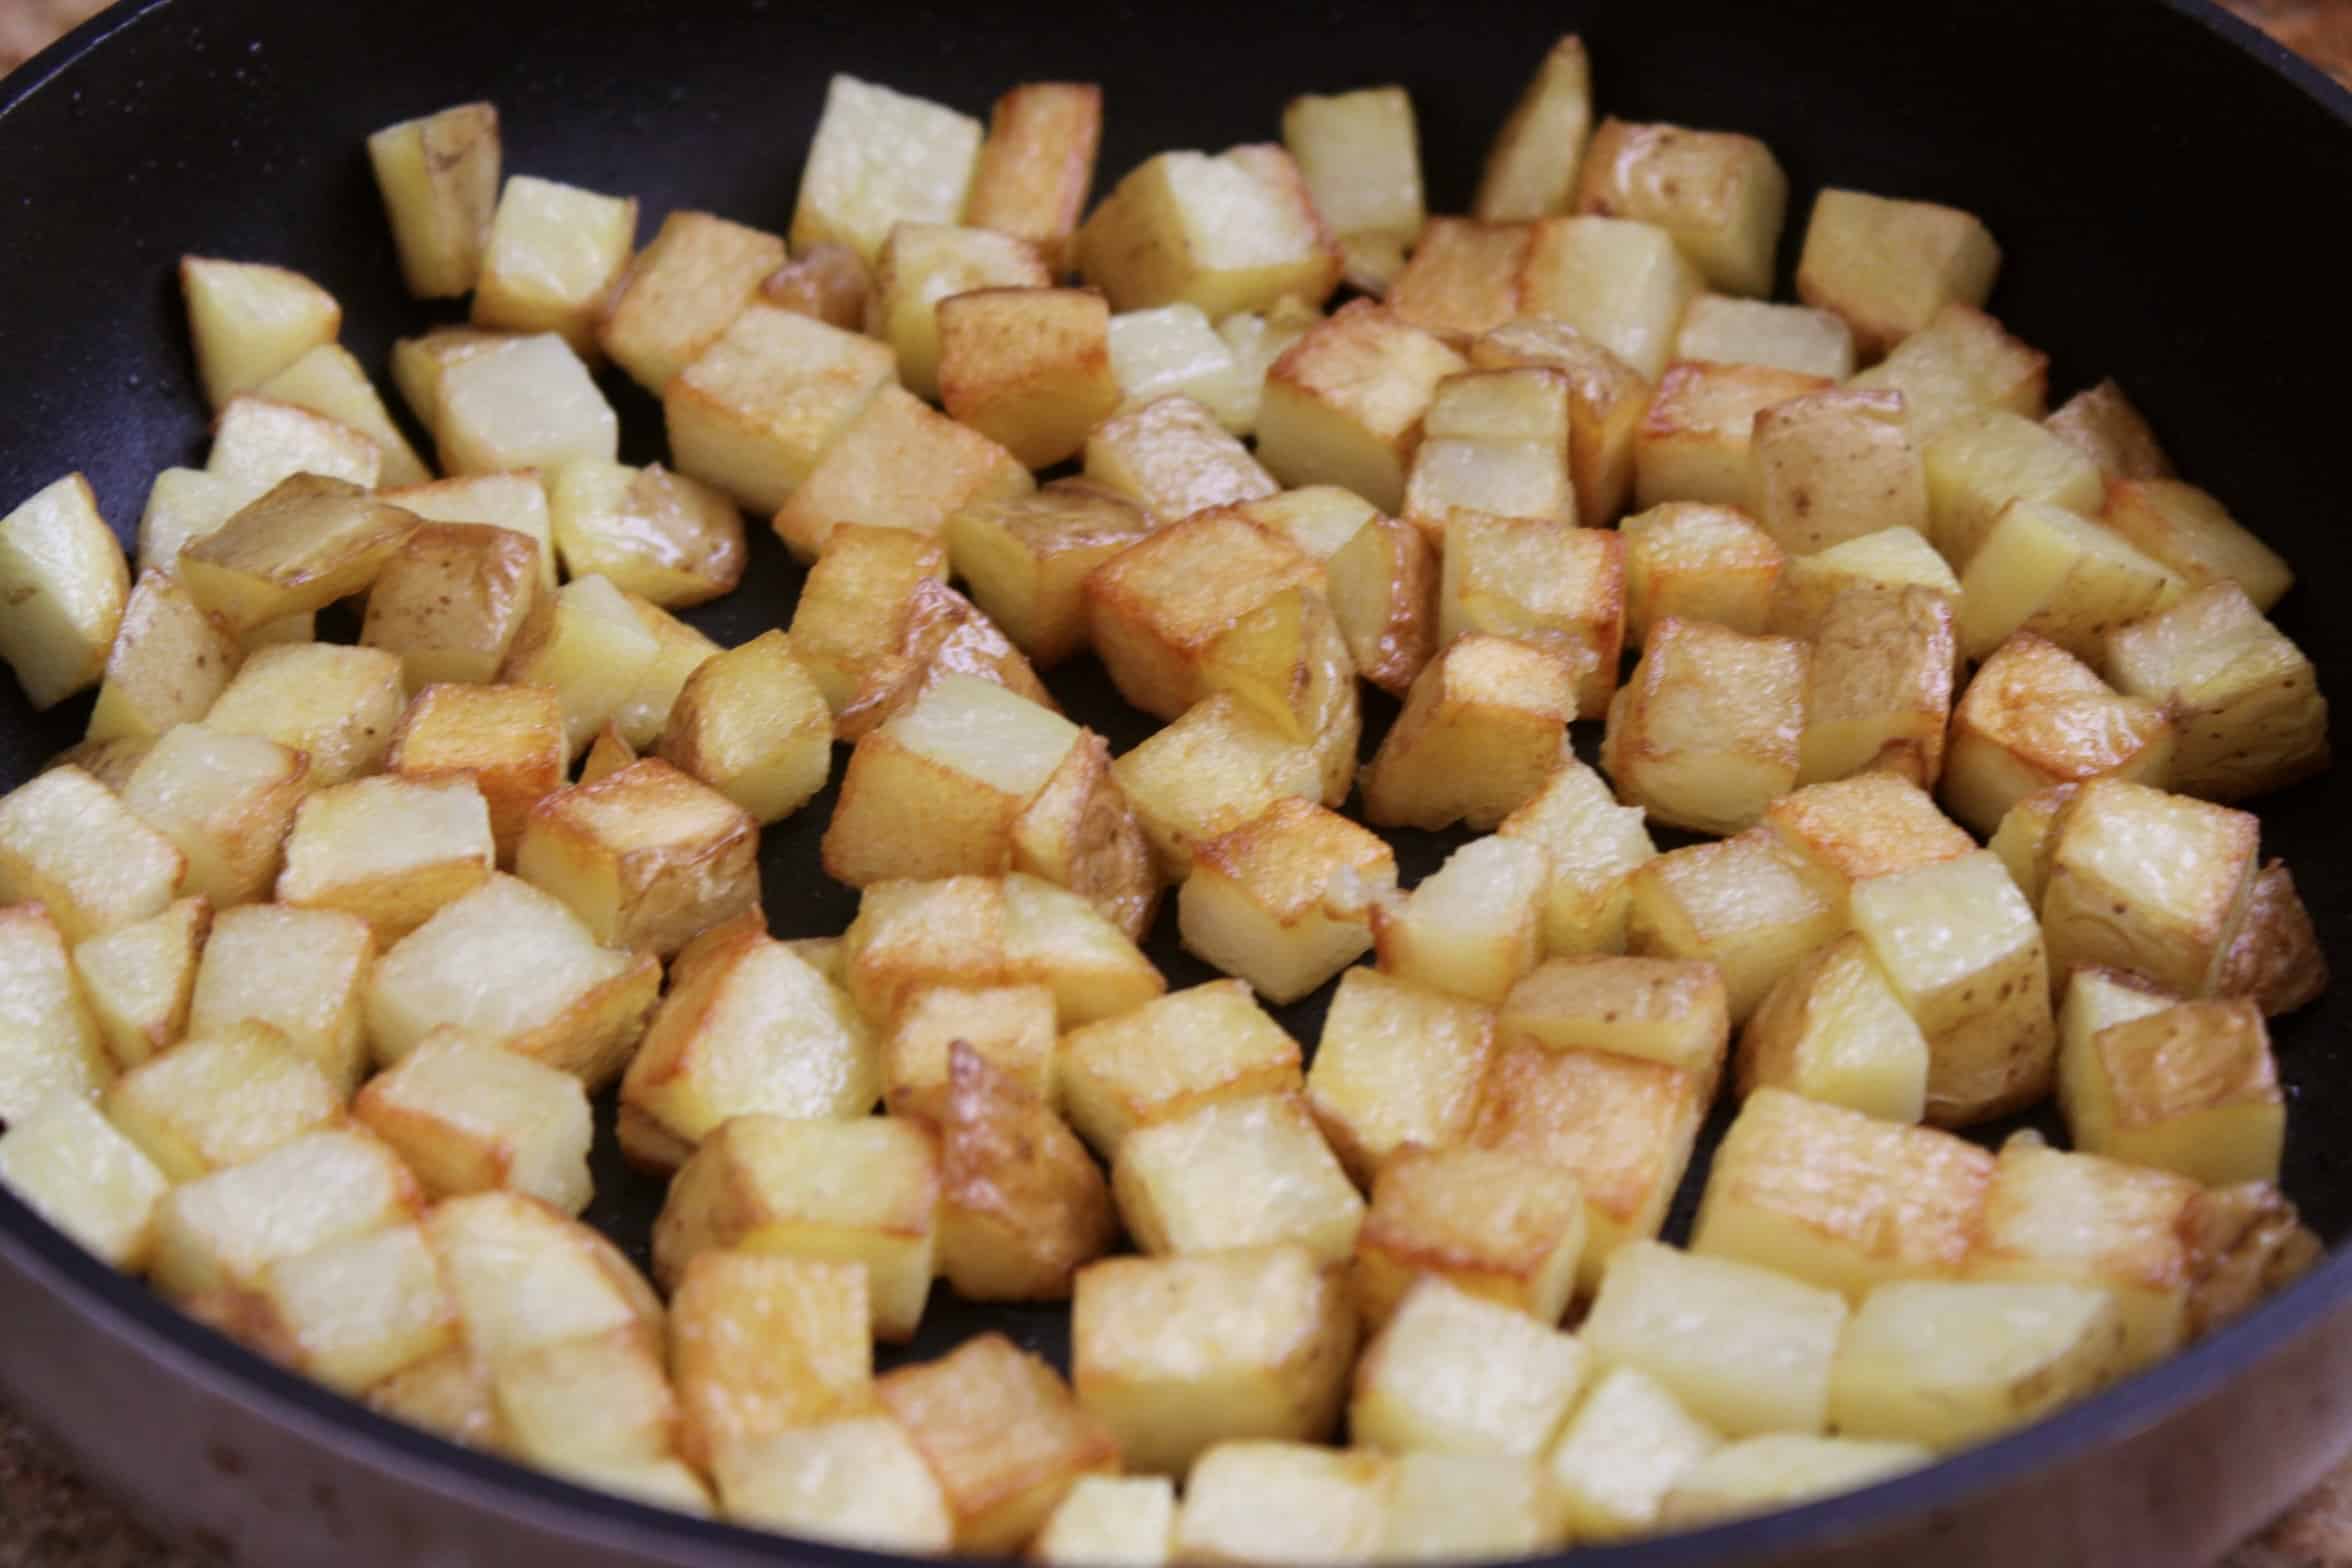 fried potatoes in a pan